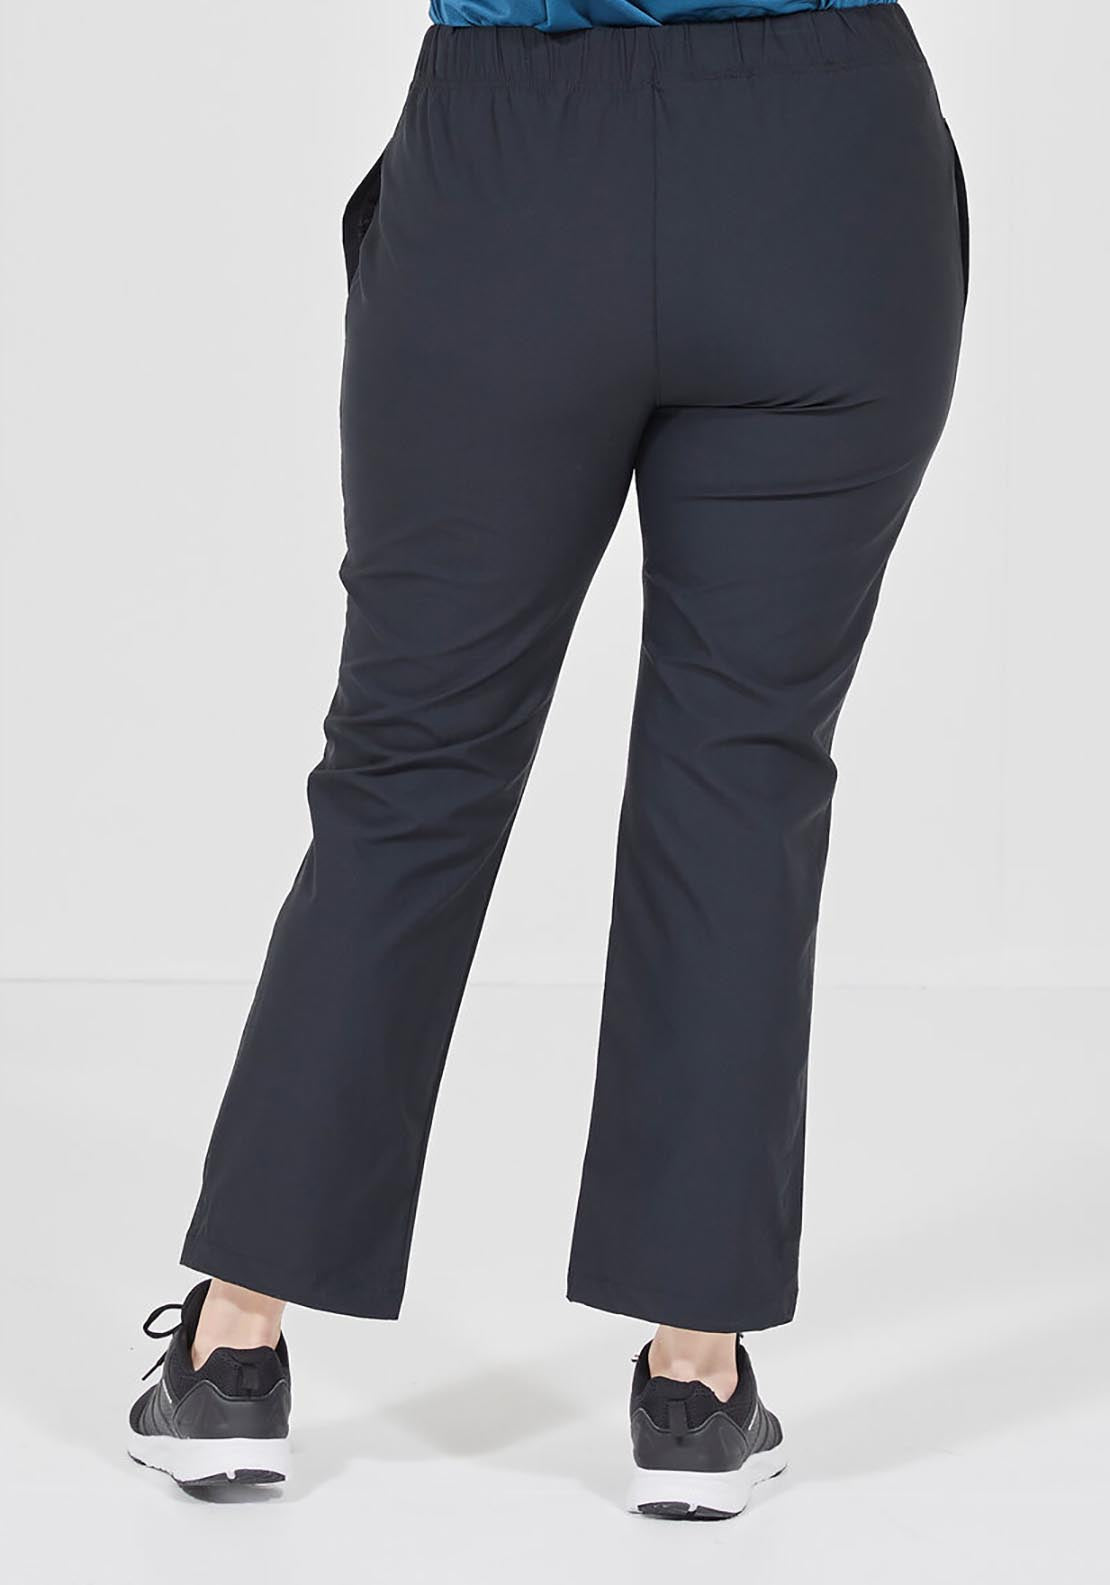 Q Carpo Womens Pants - Black 3 Shaws Department Stores